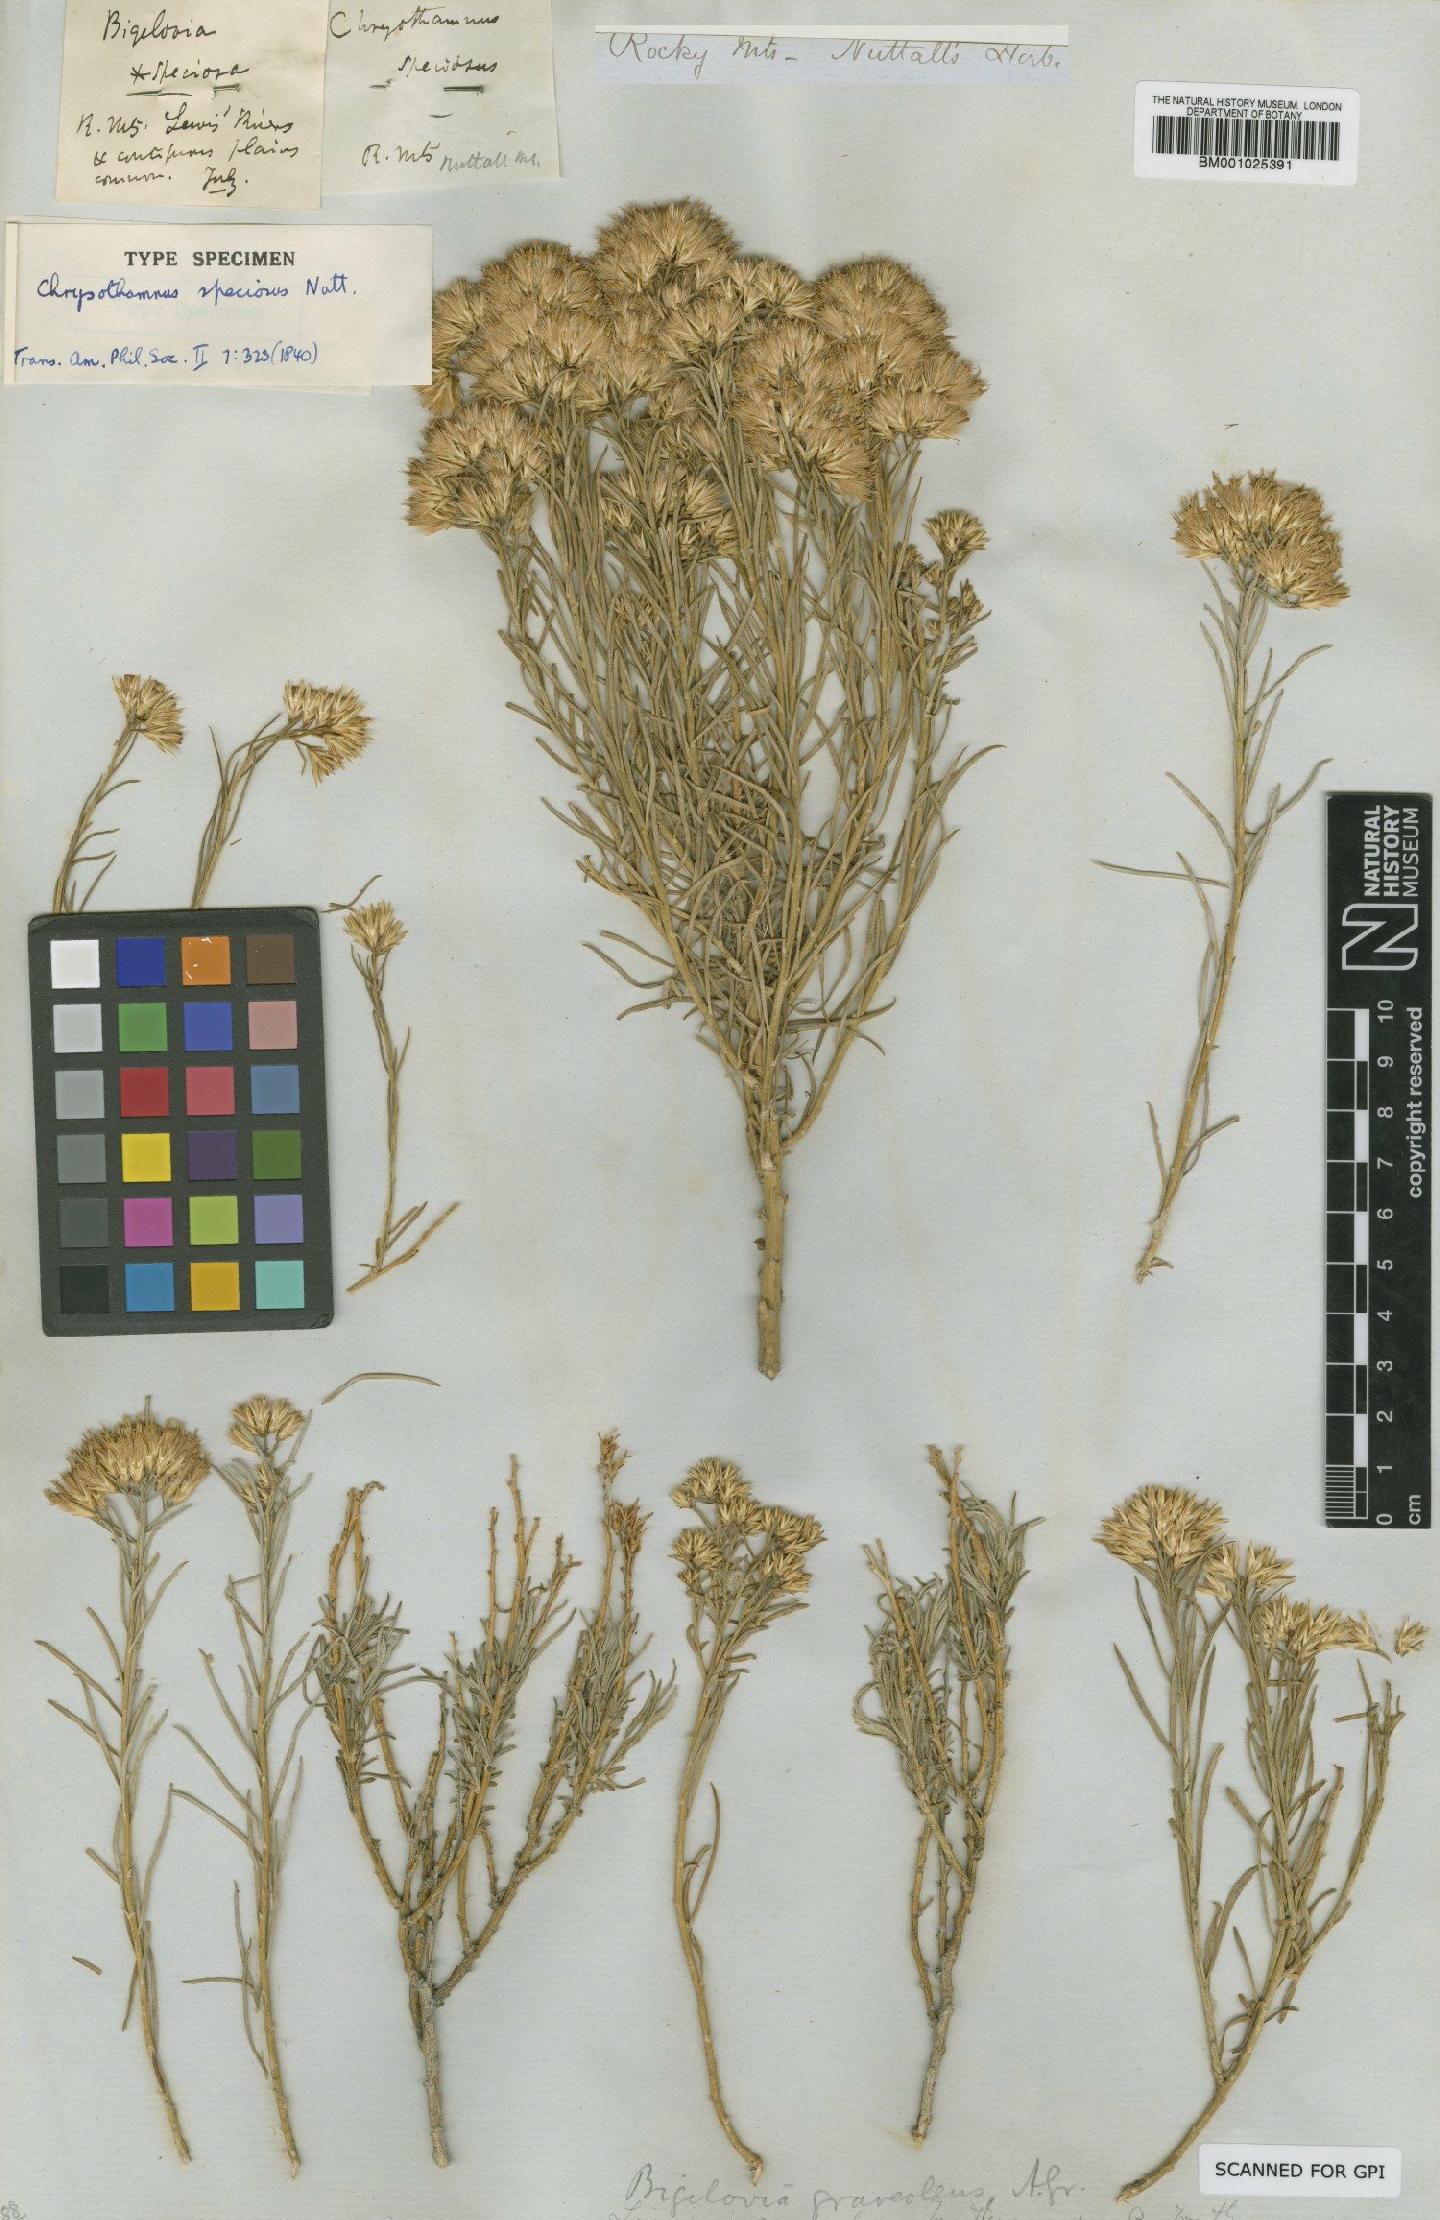 To NHMUK collection (Chrysothamnus nauseosus subsp. speciosus (Nutt.) H.M.Hall & Clem.; Type; NHMUK:ecatalogue:746551)